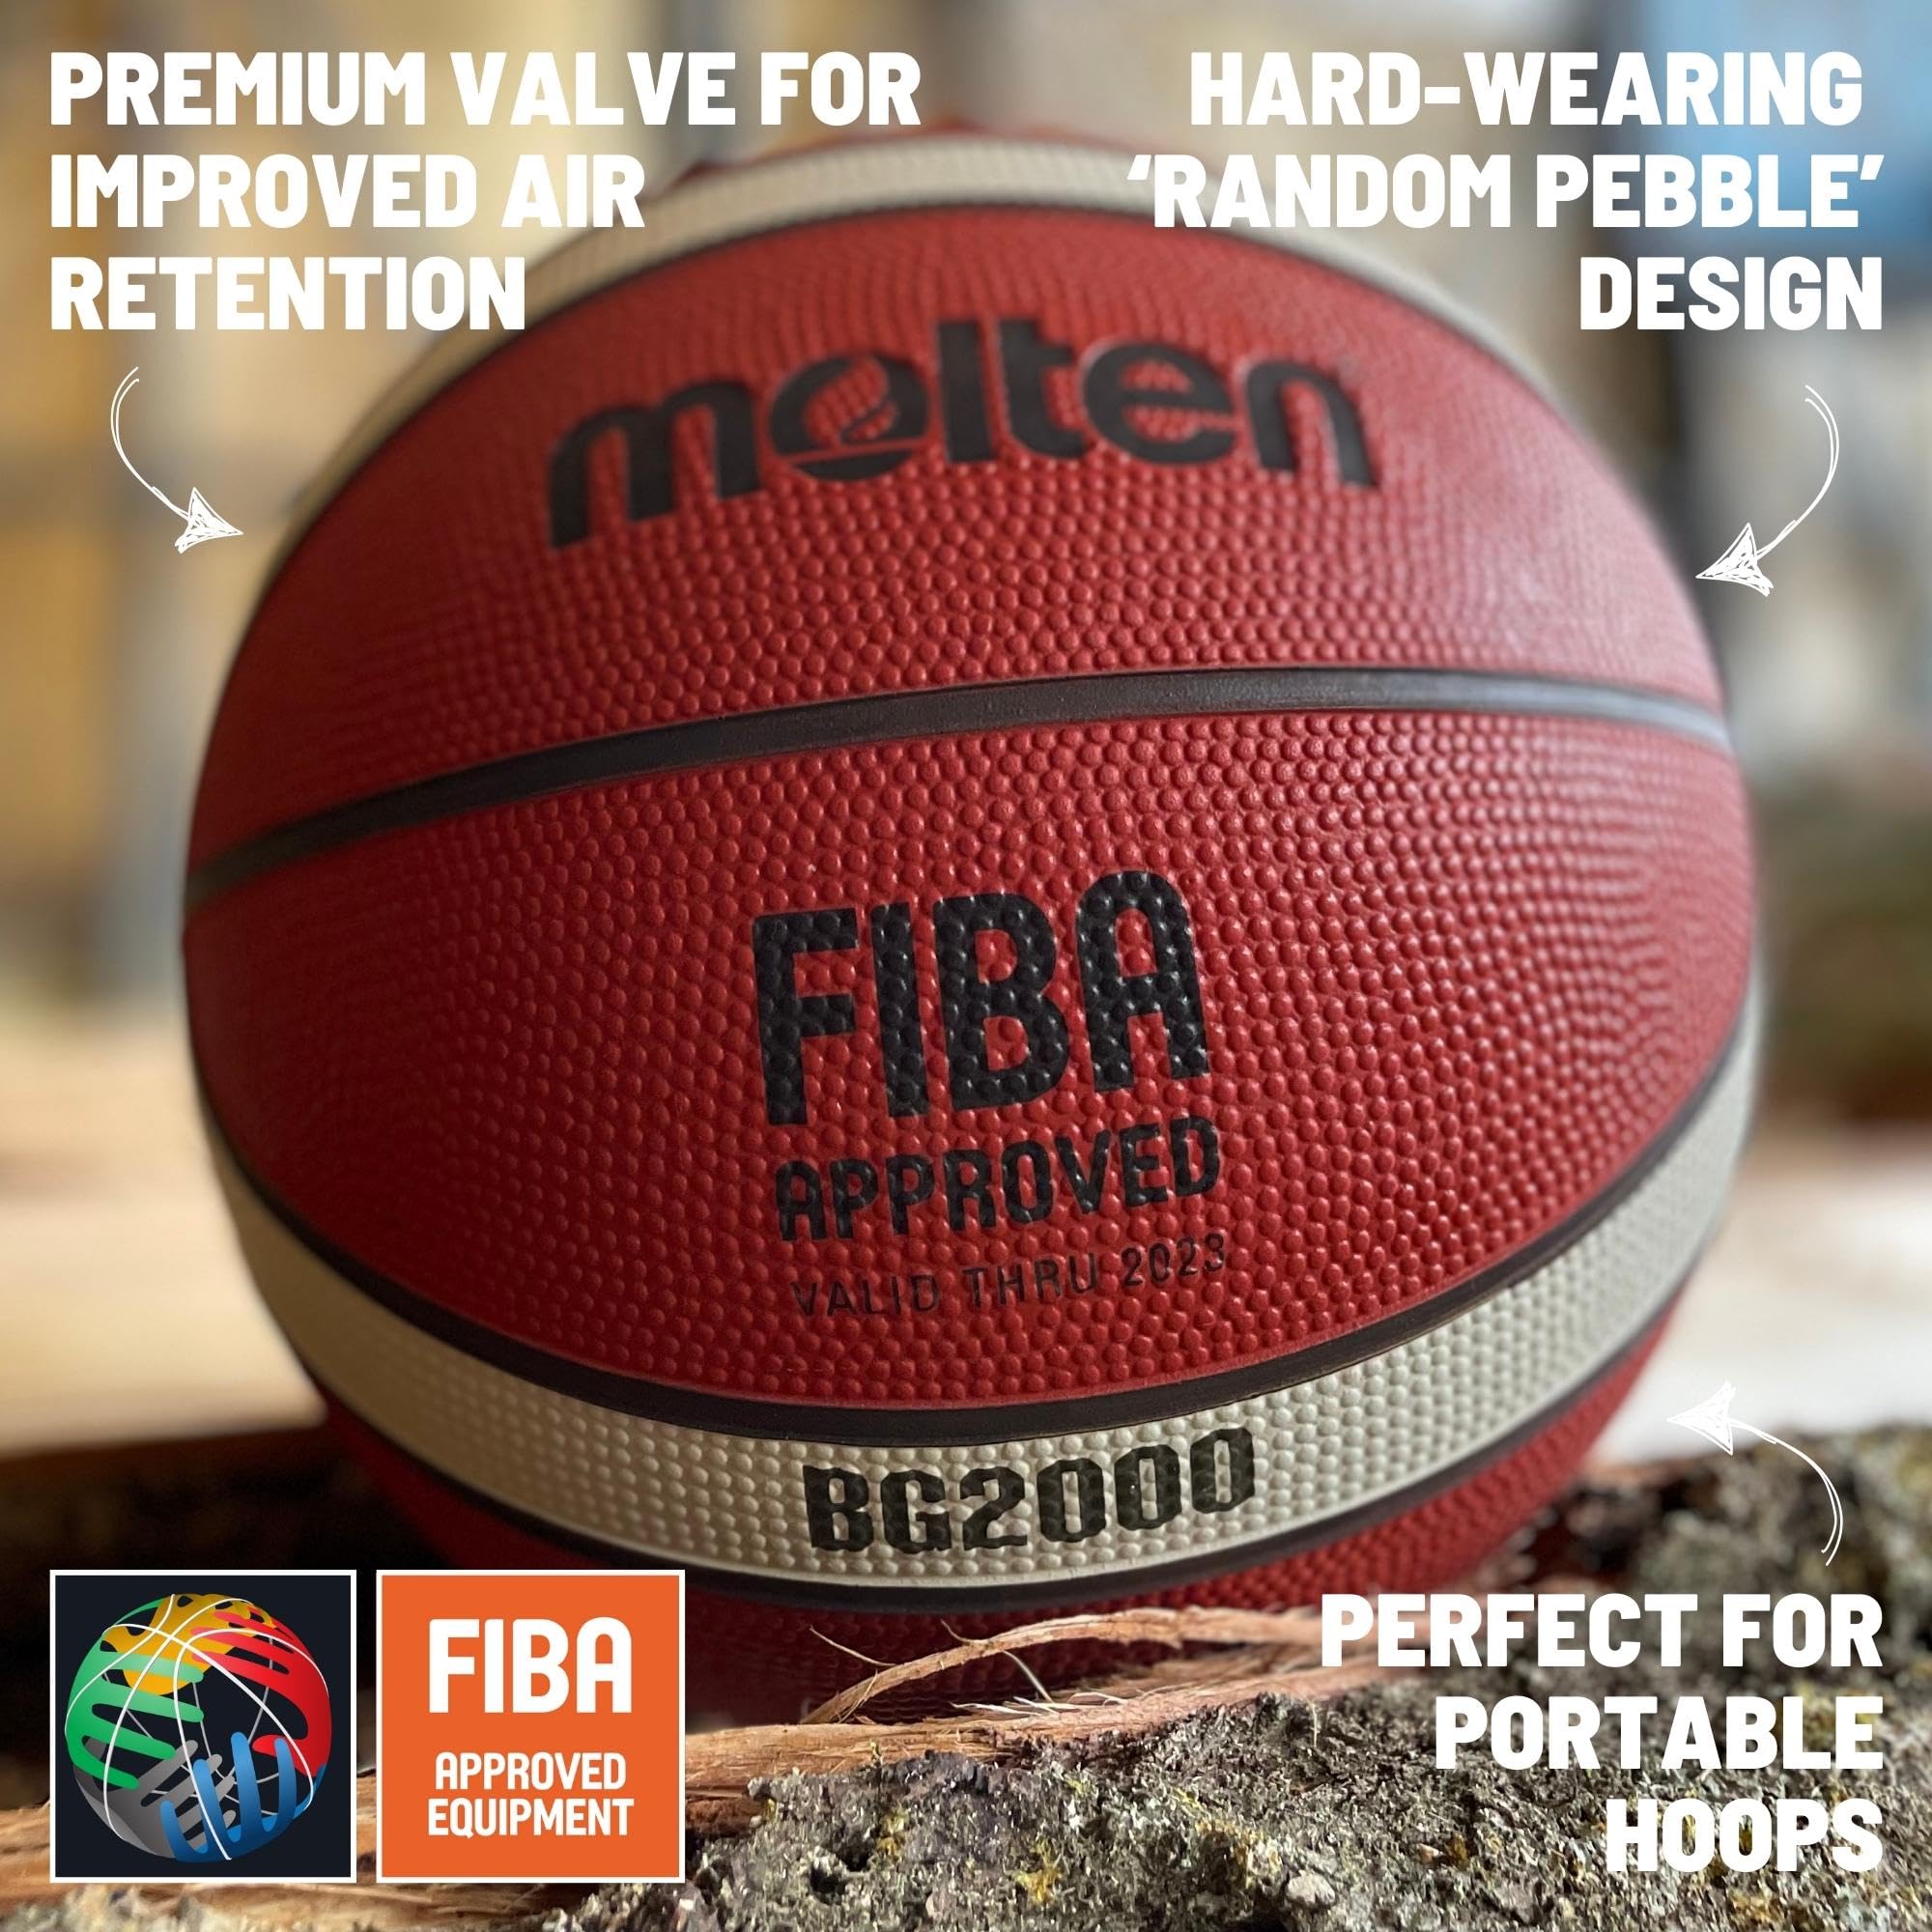 Molten BG-Series Rubber Basketball, FIBA Approved - BG2000, Size 7, 2-Tone (B7G2000)